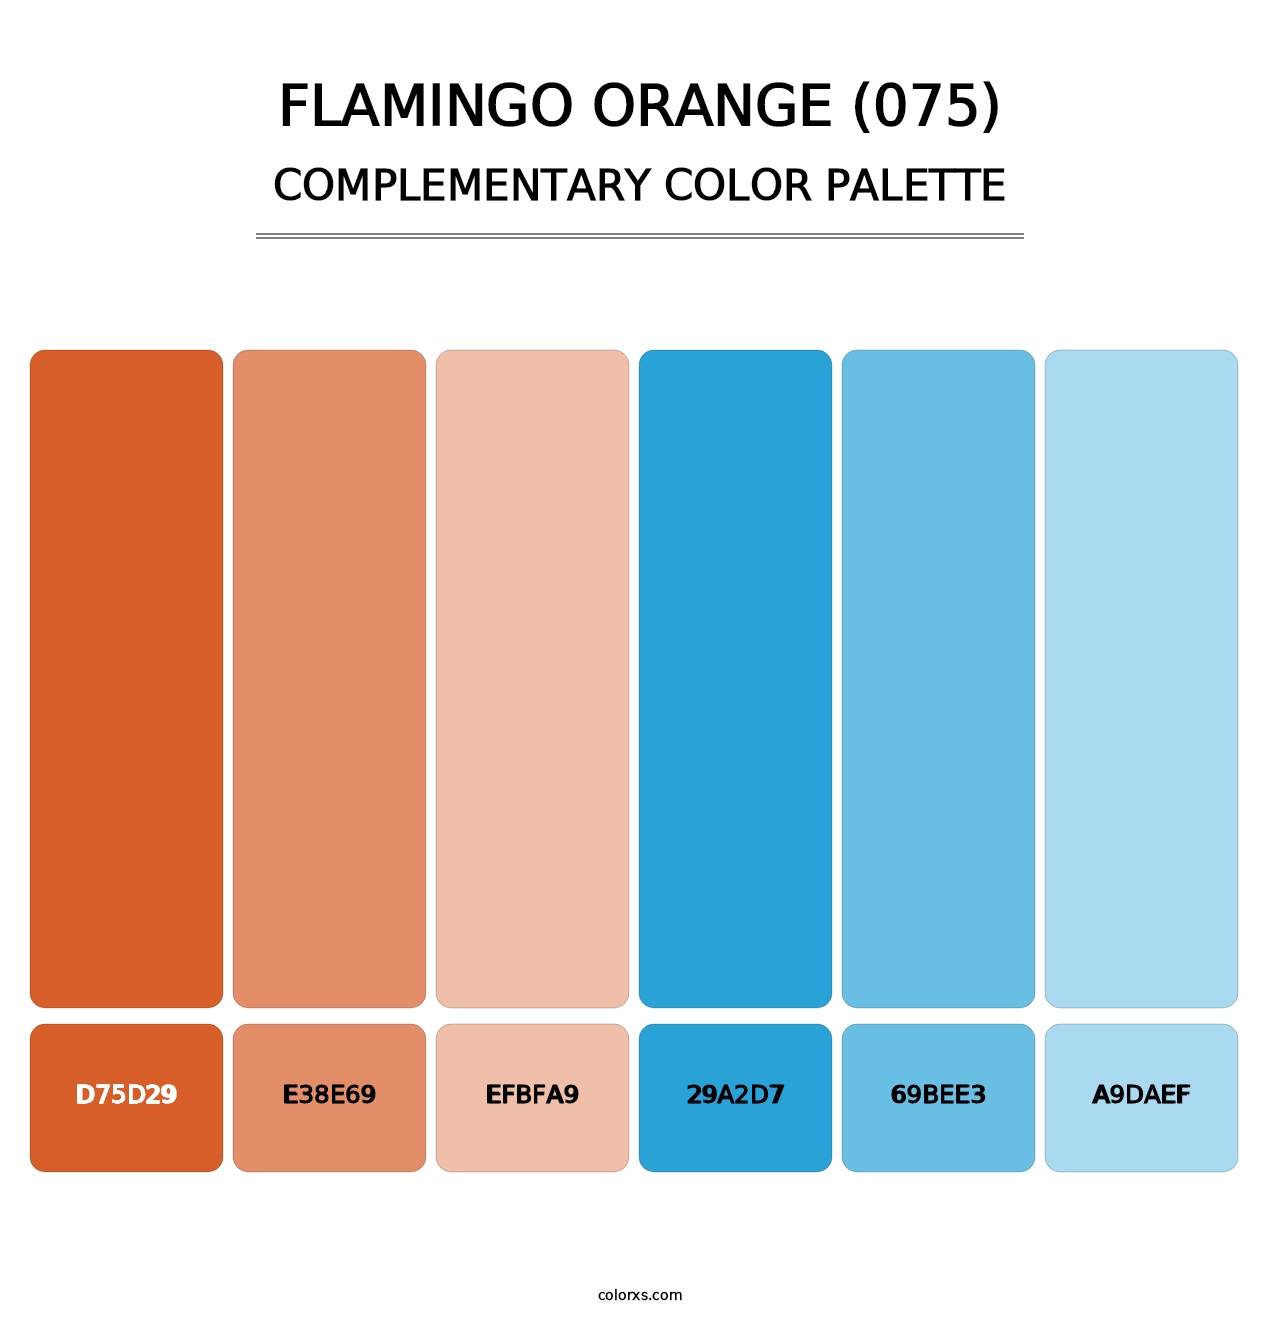 Flamingo Orange (075) - Complementary Color Palette